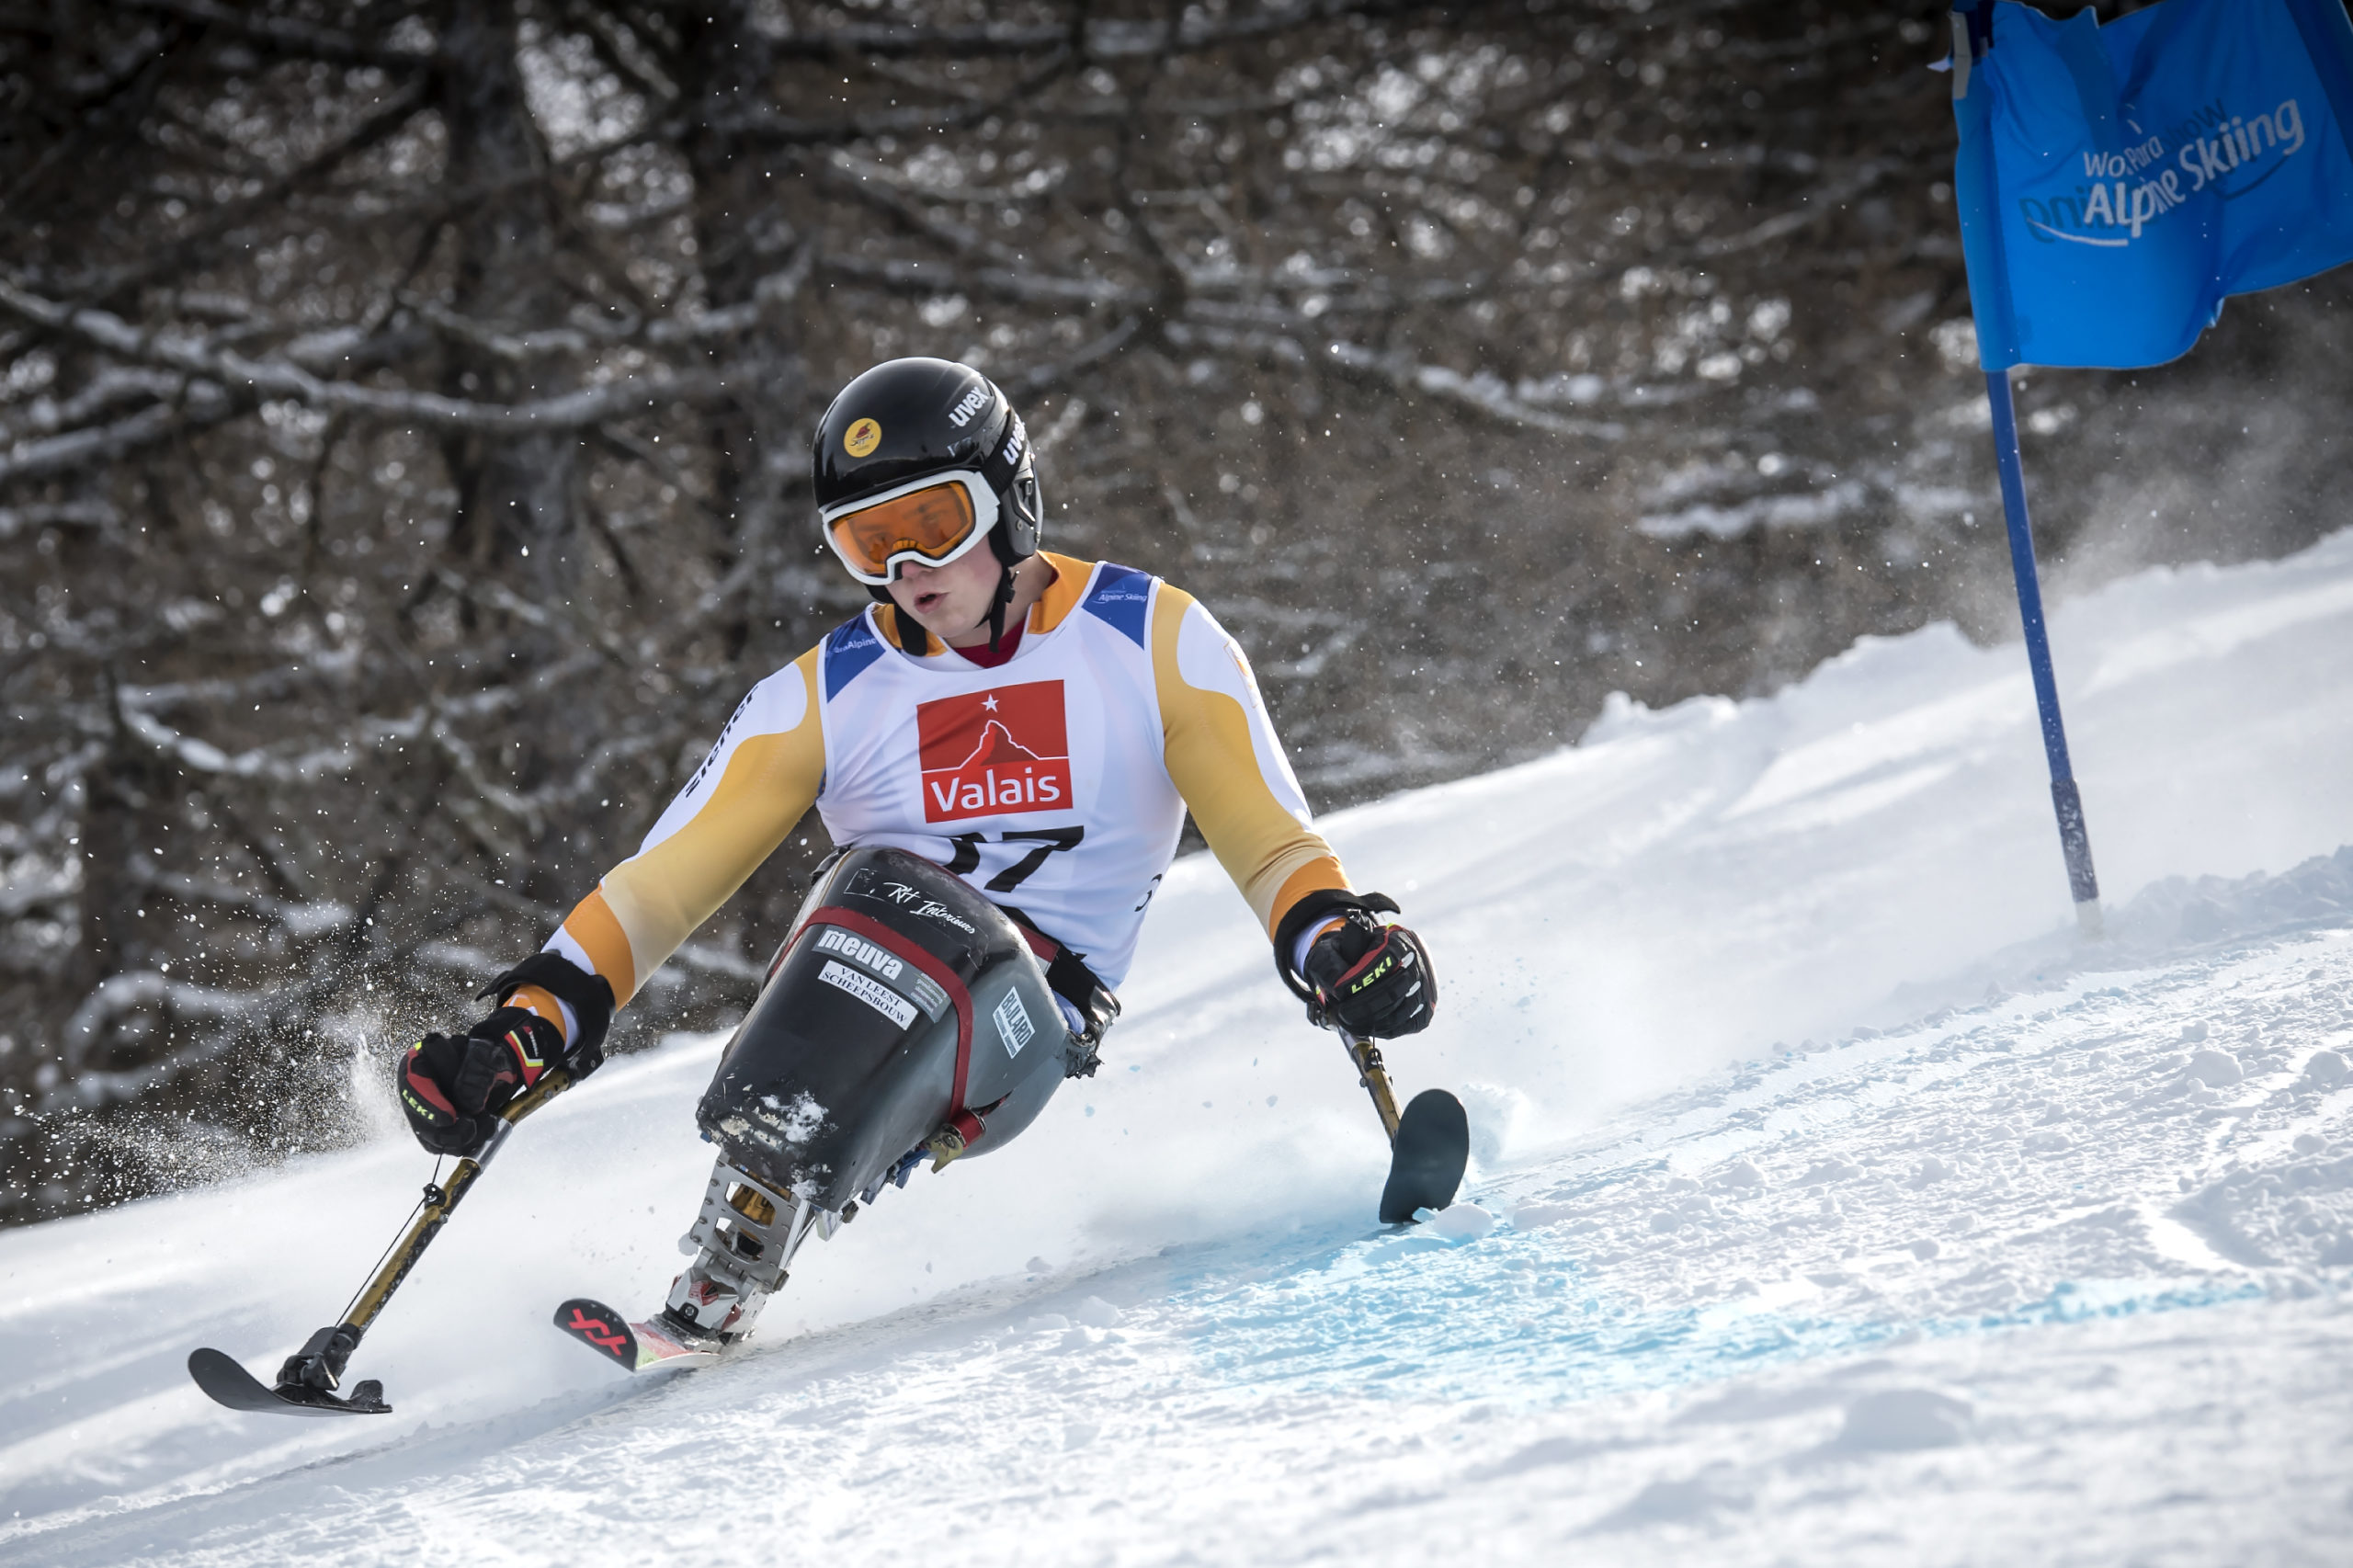 08.02.2019; Veysonnaz (Vs). World Para Alpine Skiing; Coupe du monde de Handi Ski. Slalom Geant; Jeroen KAMPSCHREUR (NED)
photo Jean-Guy Python